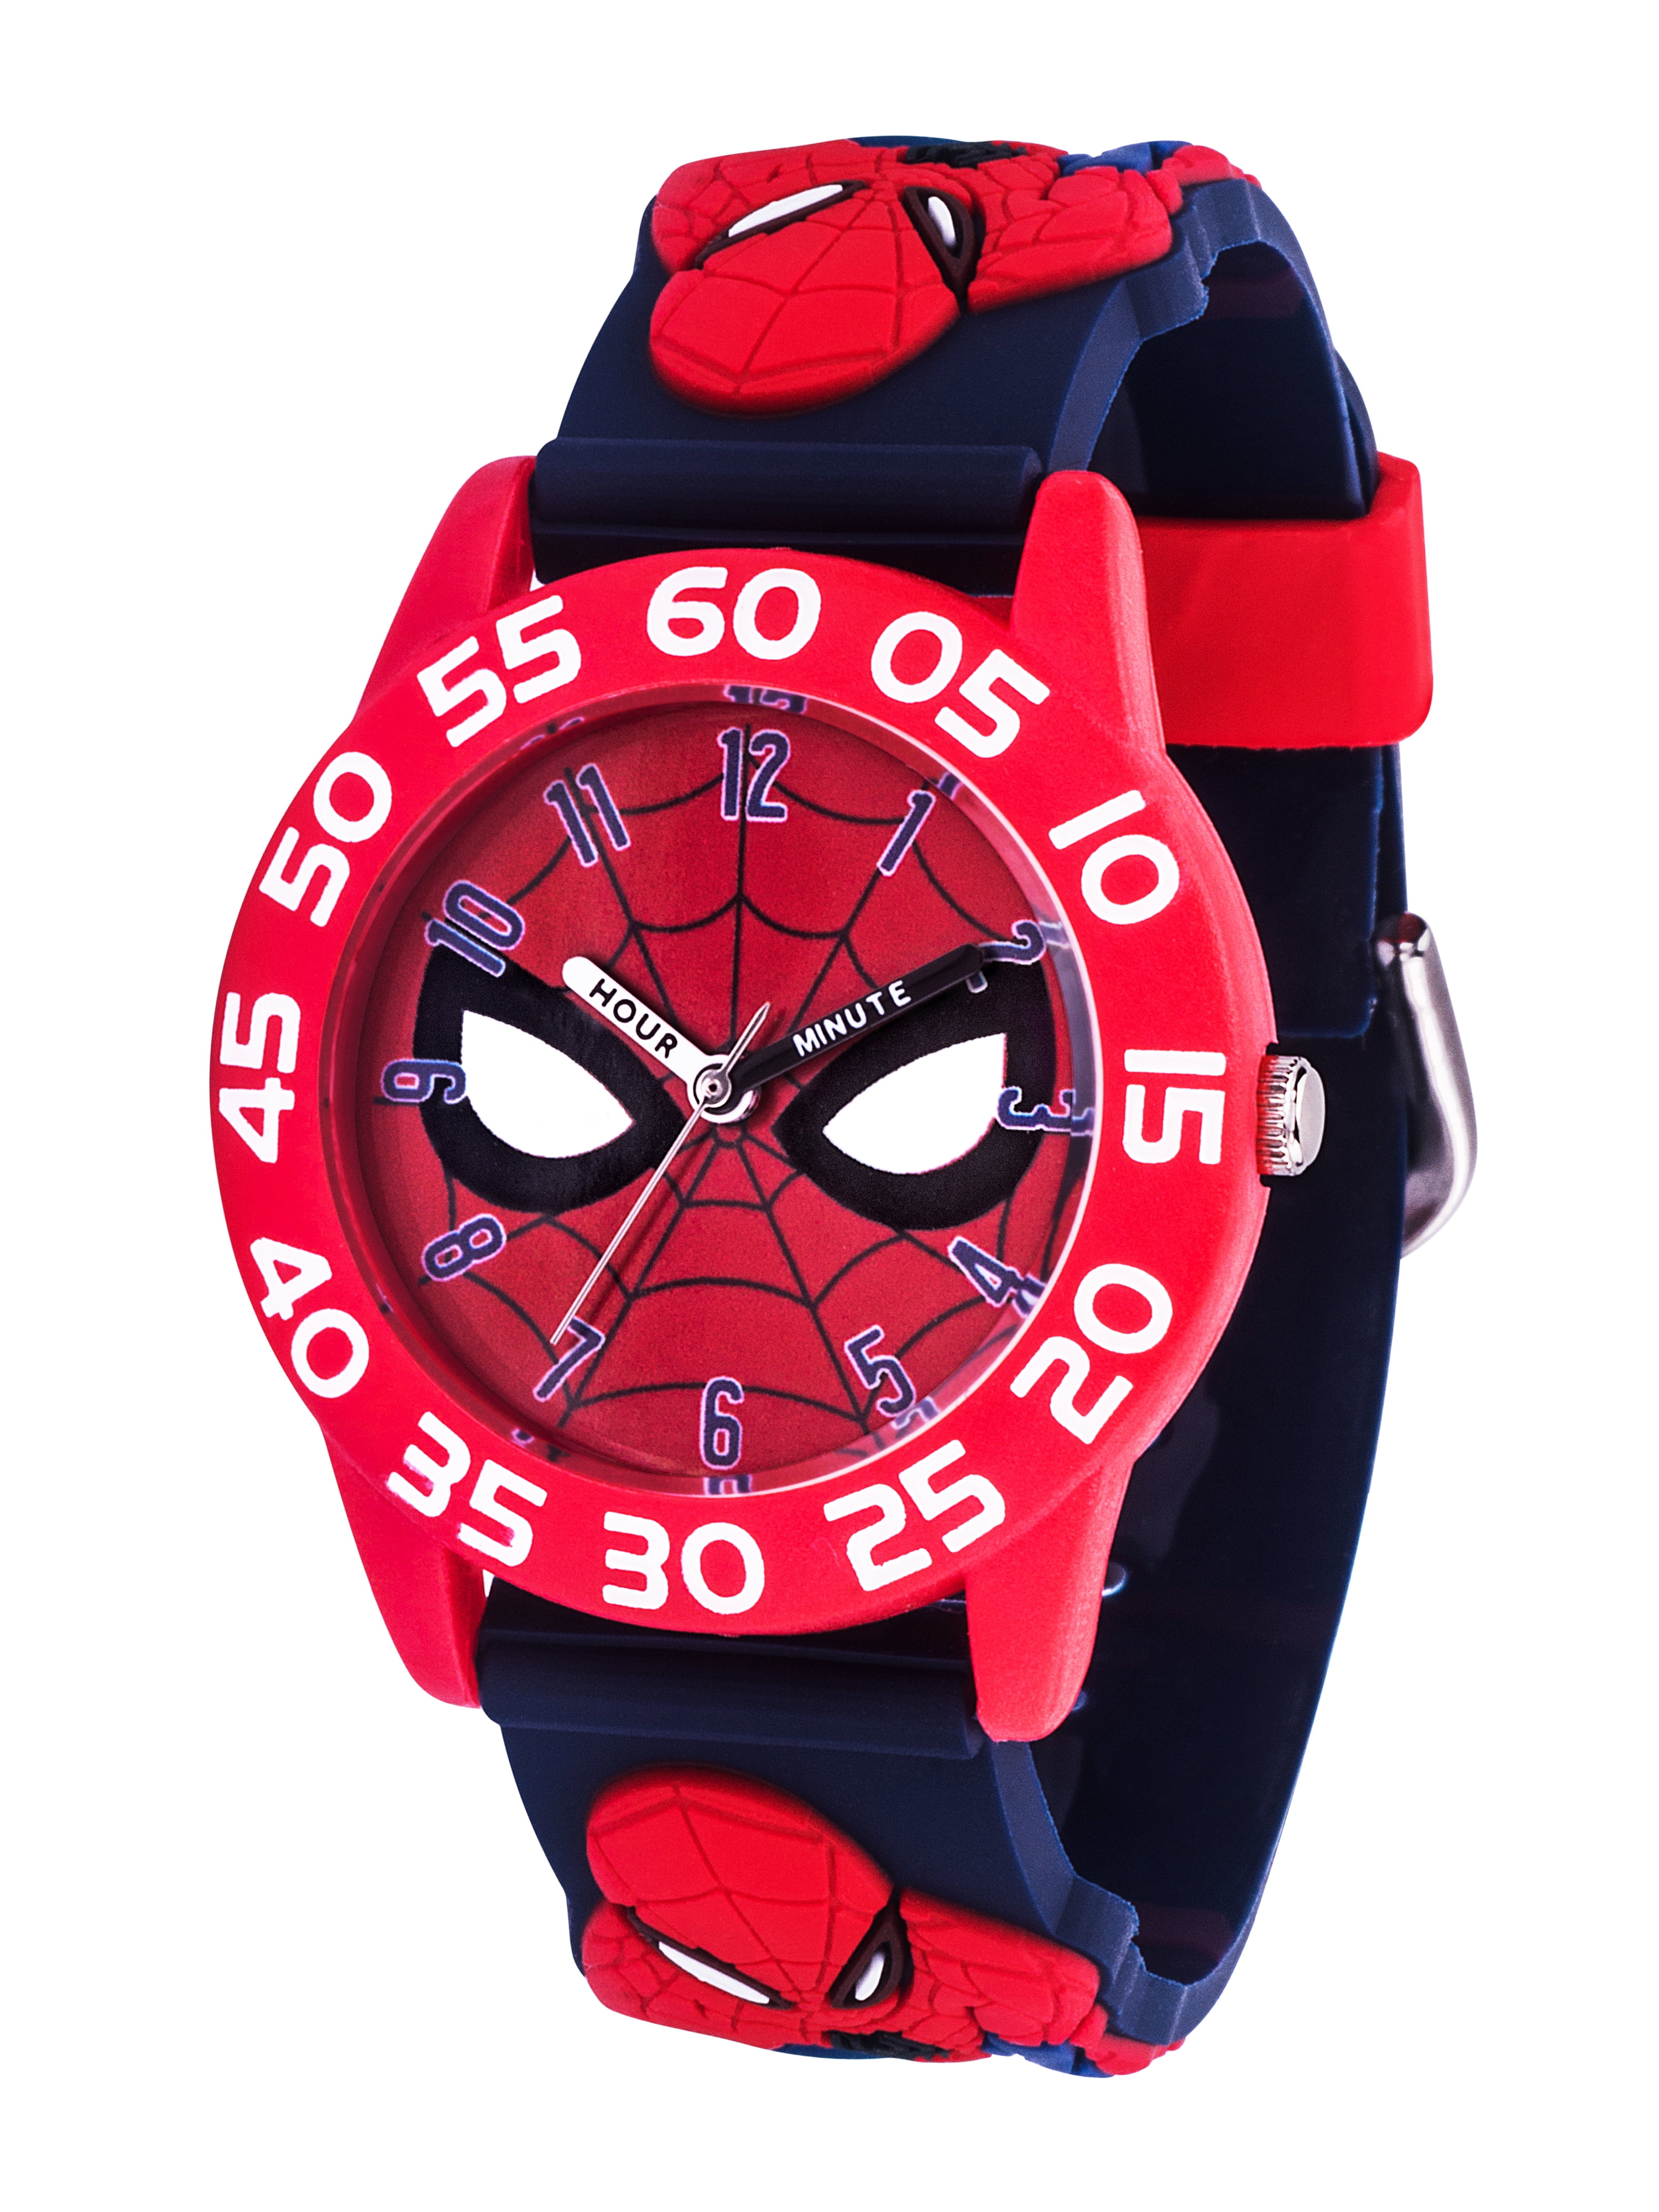 Marvel Marvel SpiderMan Boys' Red Plastic Watch, 1Pack